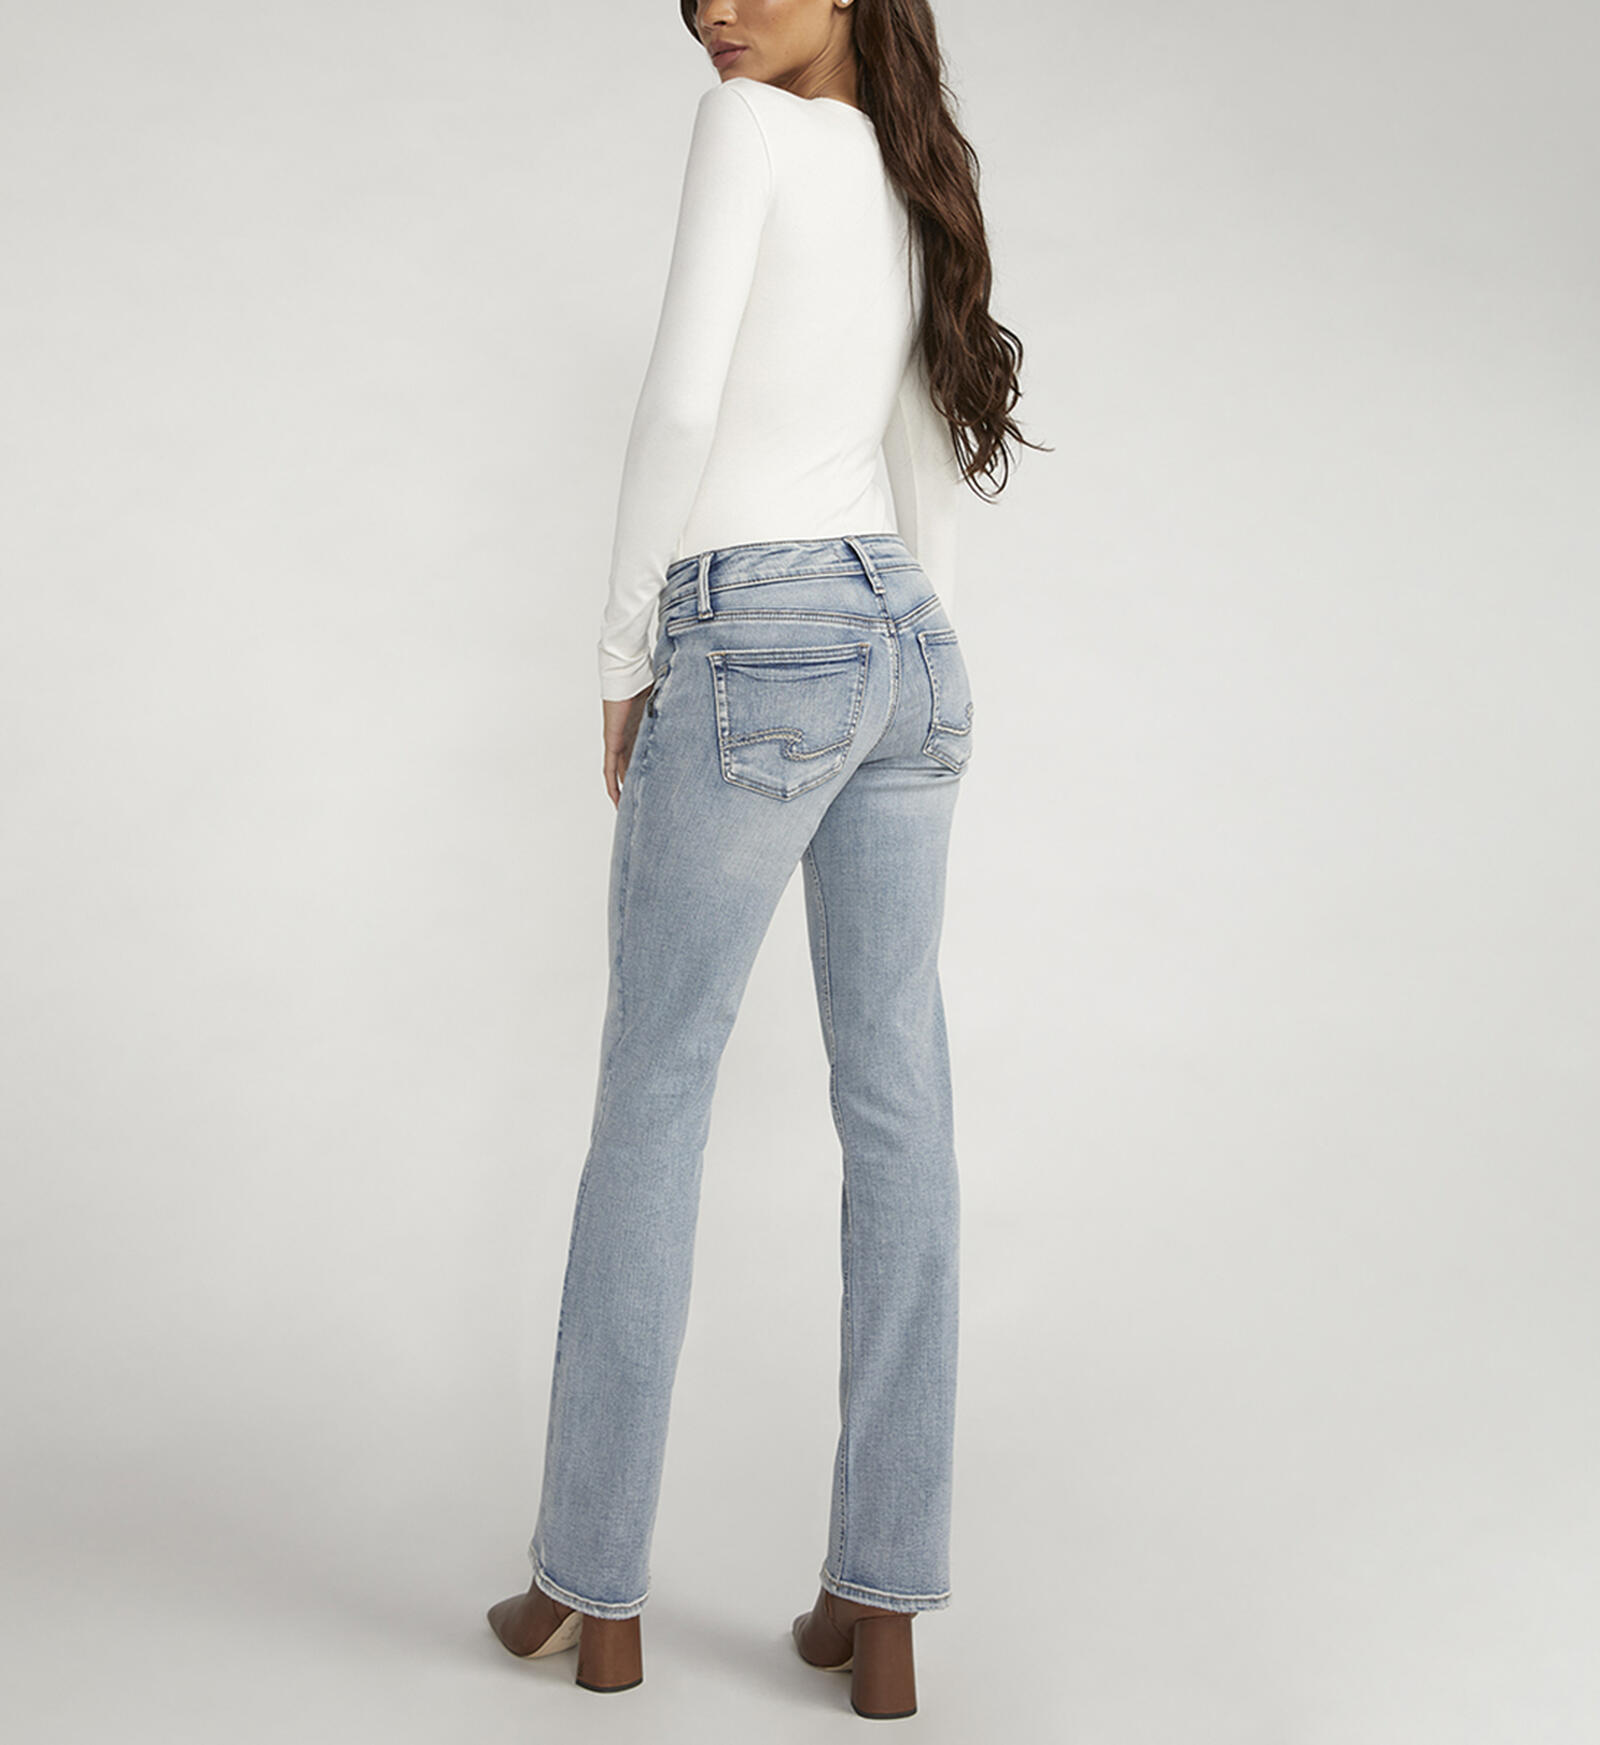 Women's Grey Bootcut Jeans